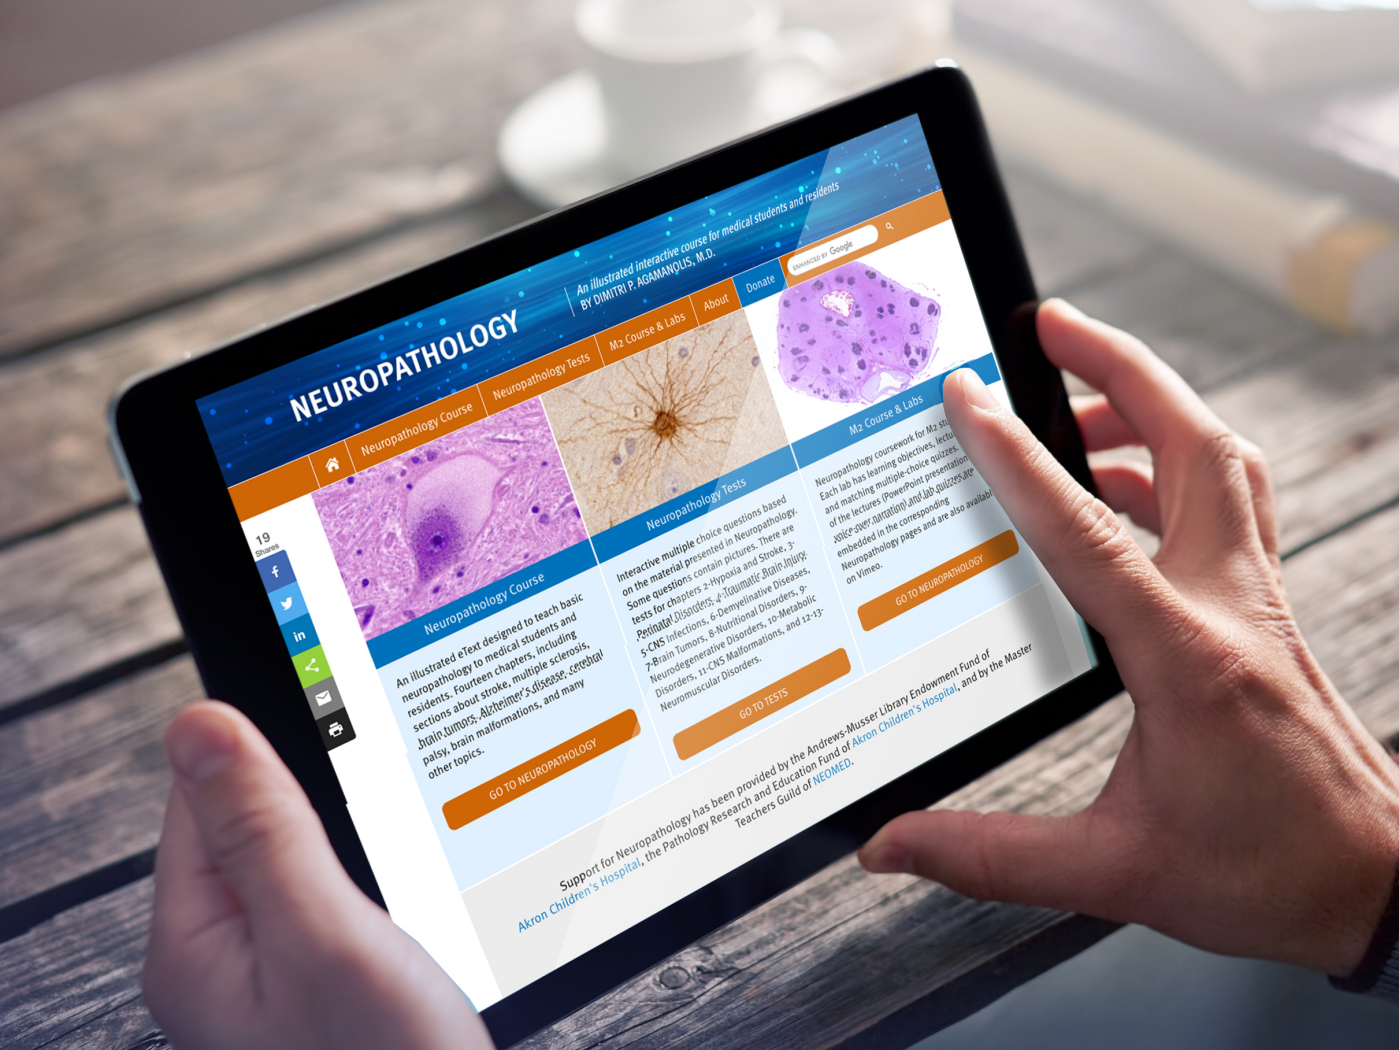 Viewing the Neuropathology Website on an iPad